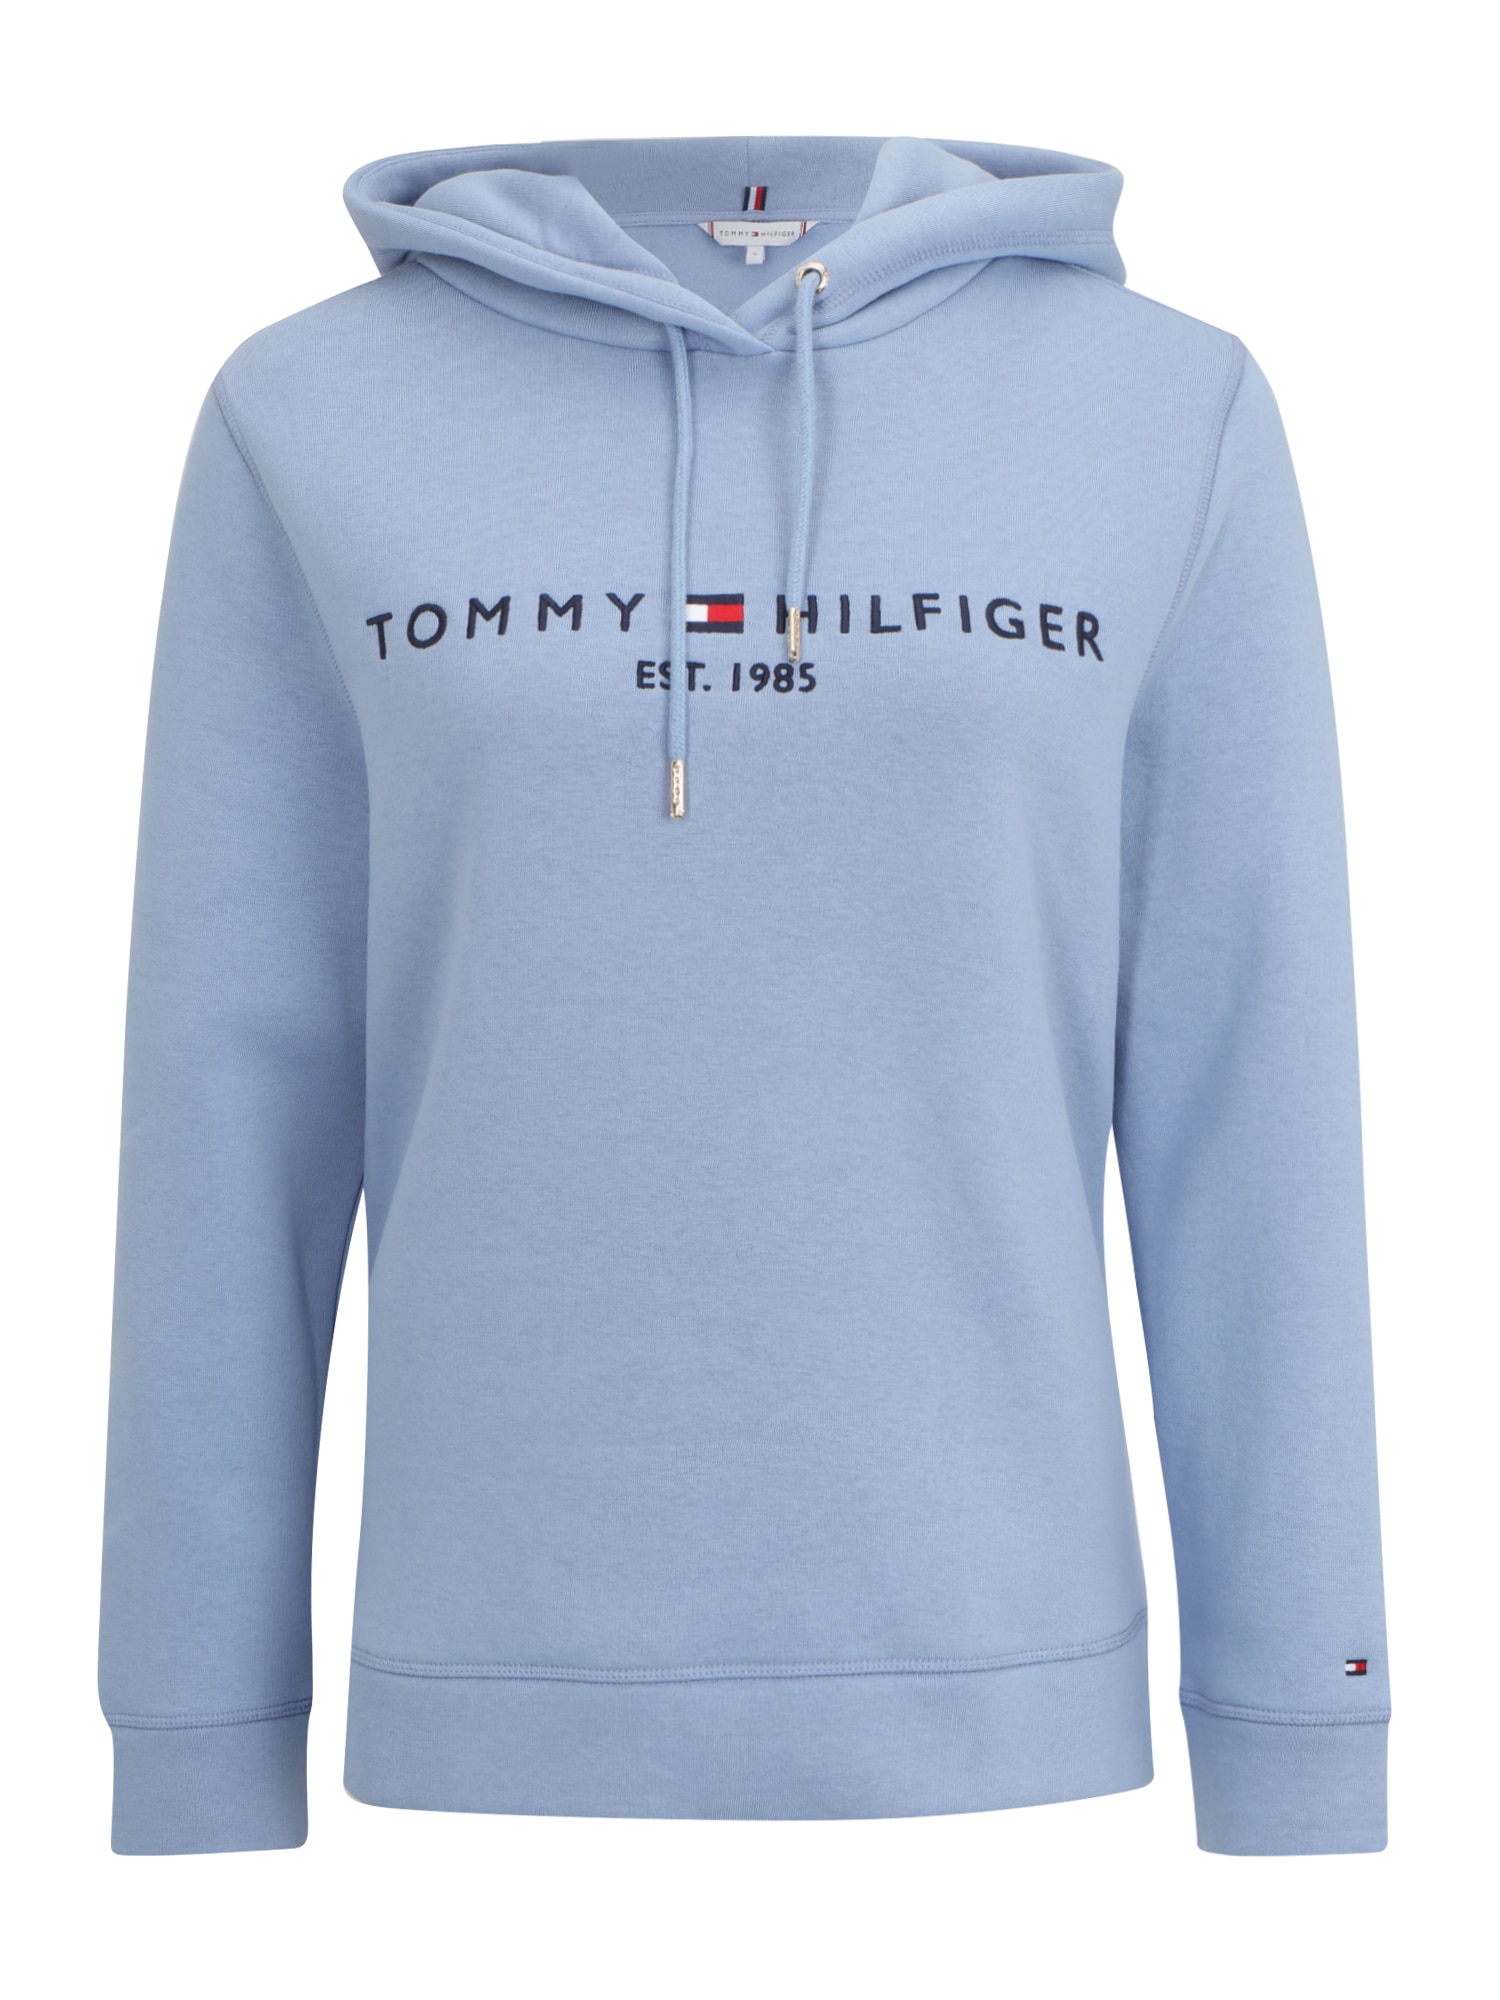 TOMMY HILFIGER Majica  nočno modra / svetlo modra / rdeča / bela